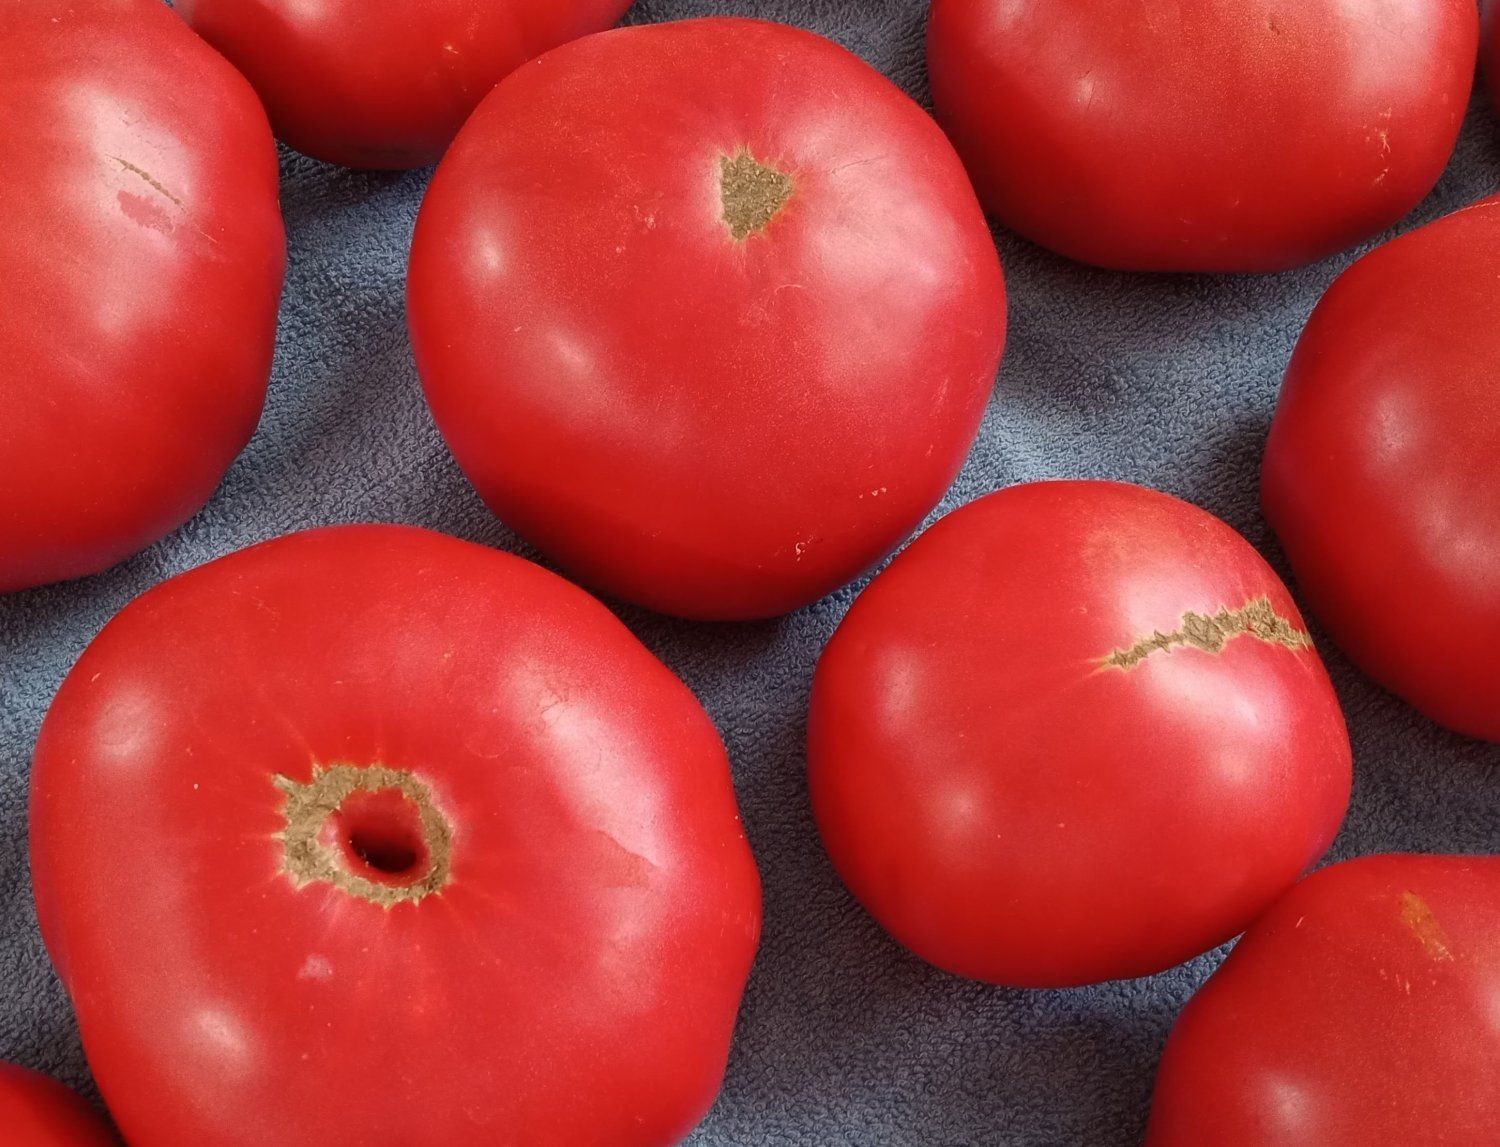 Next Happening: Tomato Time